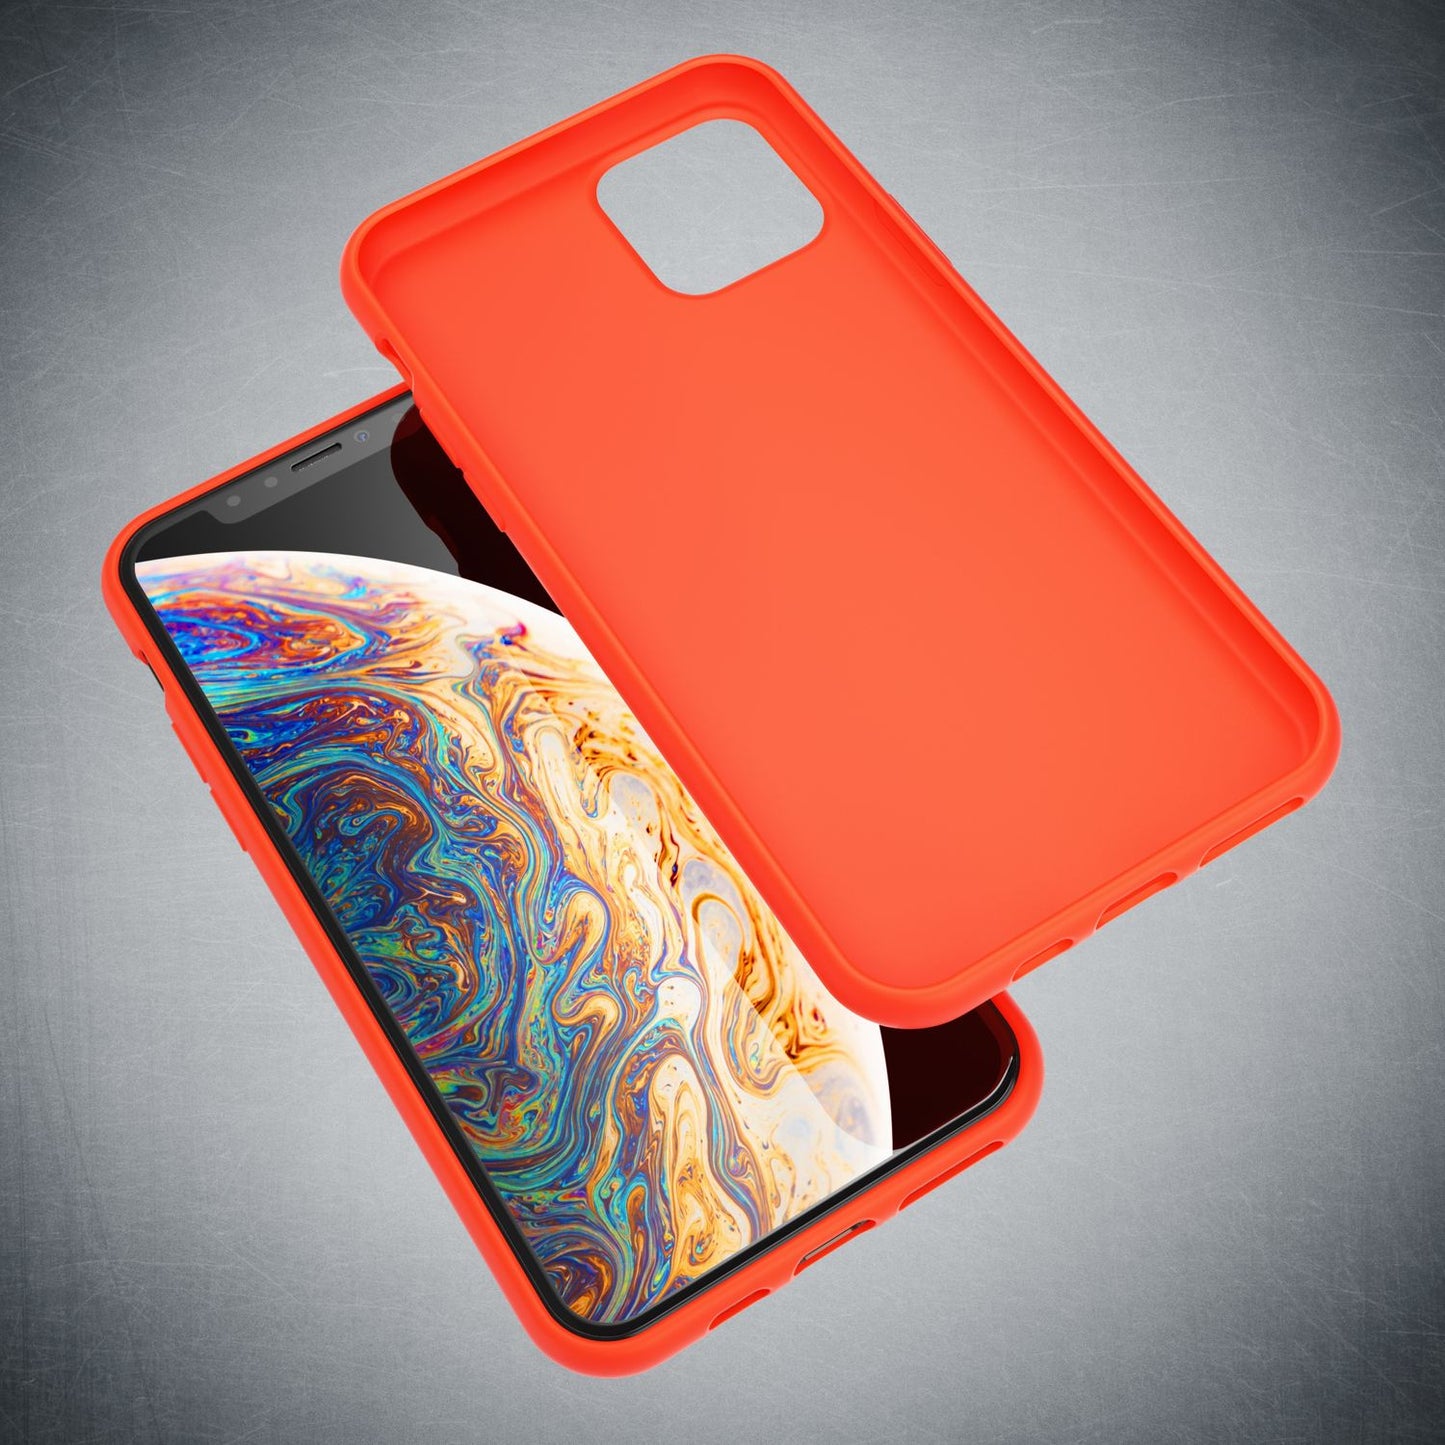 NALIA Neon Handy Hülle für iPhone 11 Pro, Slim Soft Case Silikon Bumper Cover